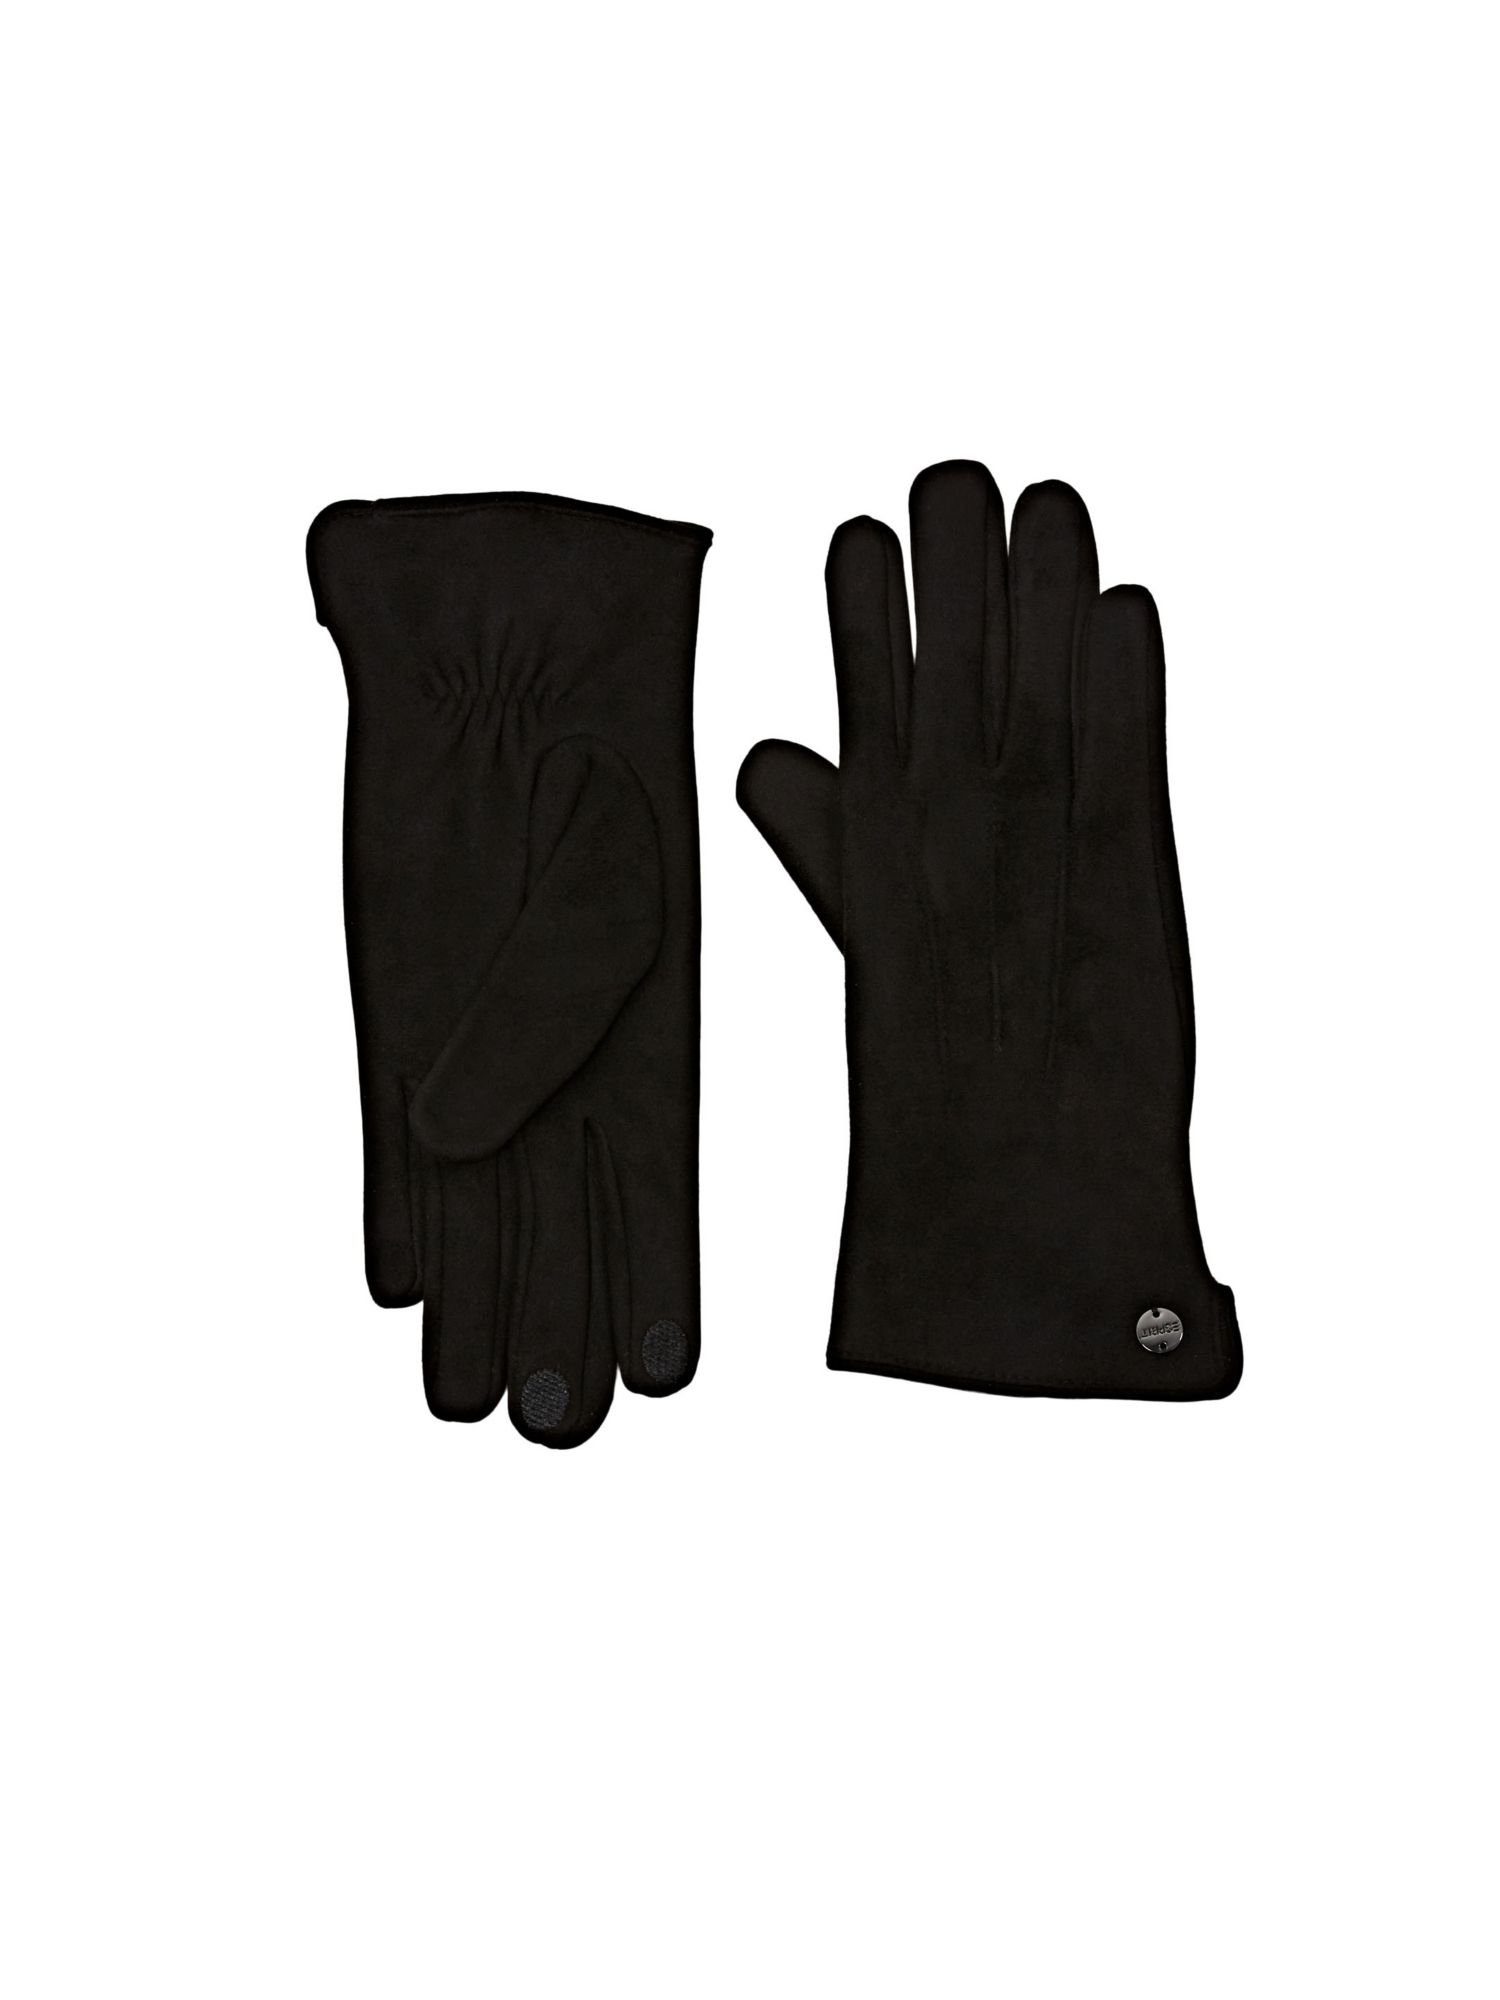 BLACK Strickhandschuhe Touchscreen-Funktion Rauleder-Handschuhe mit Esprit